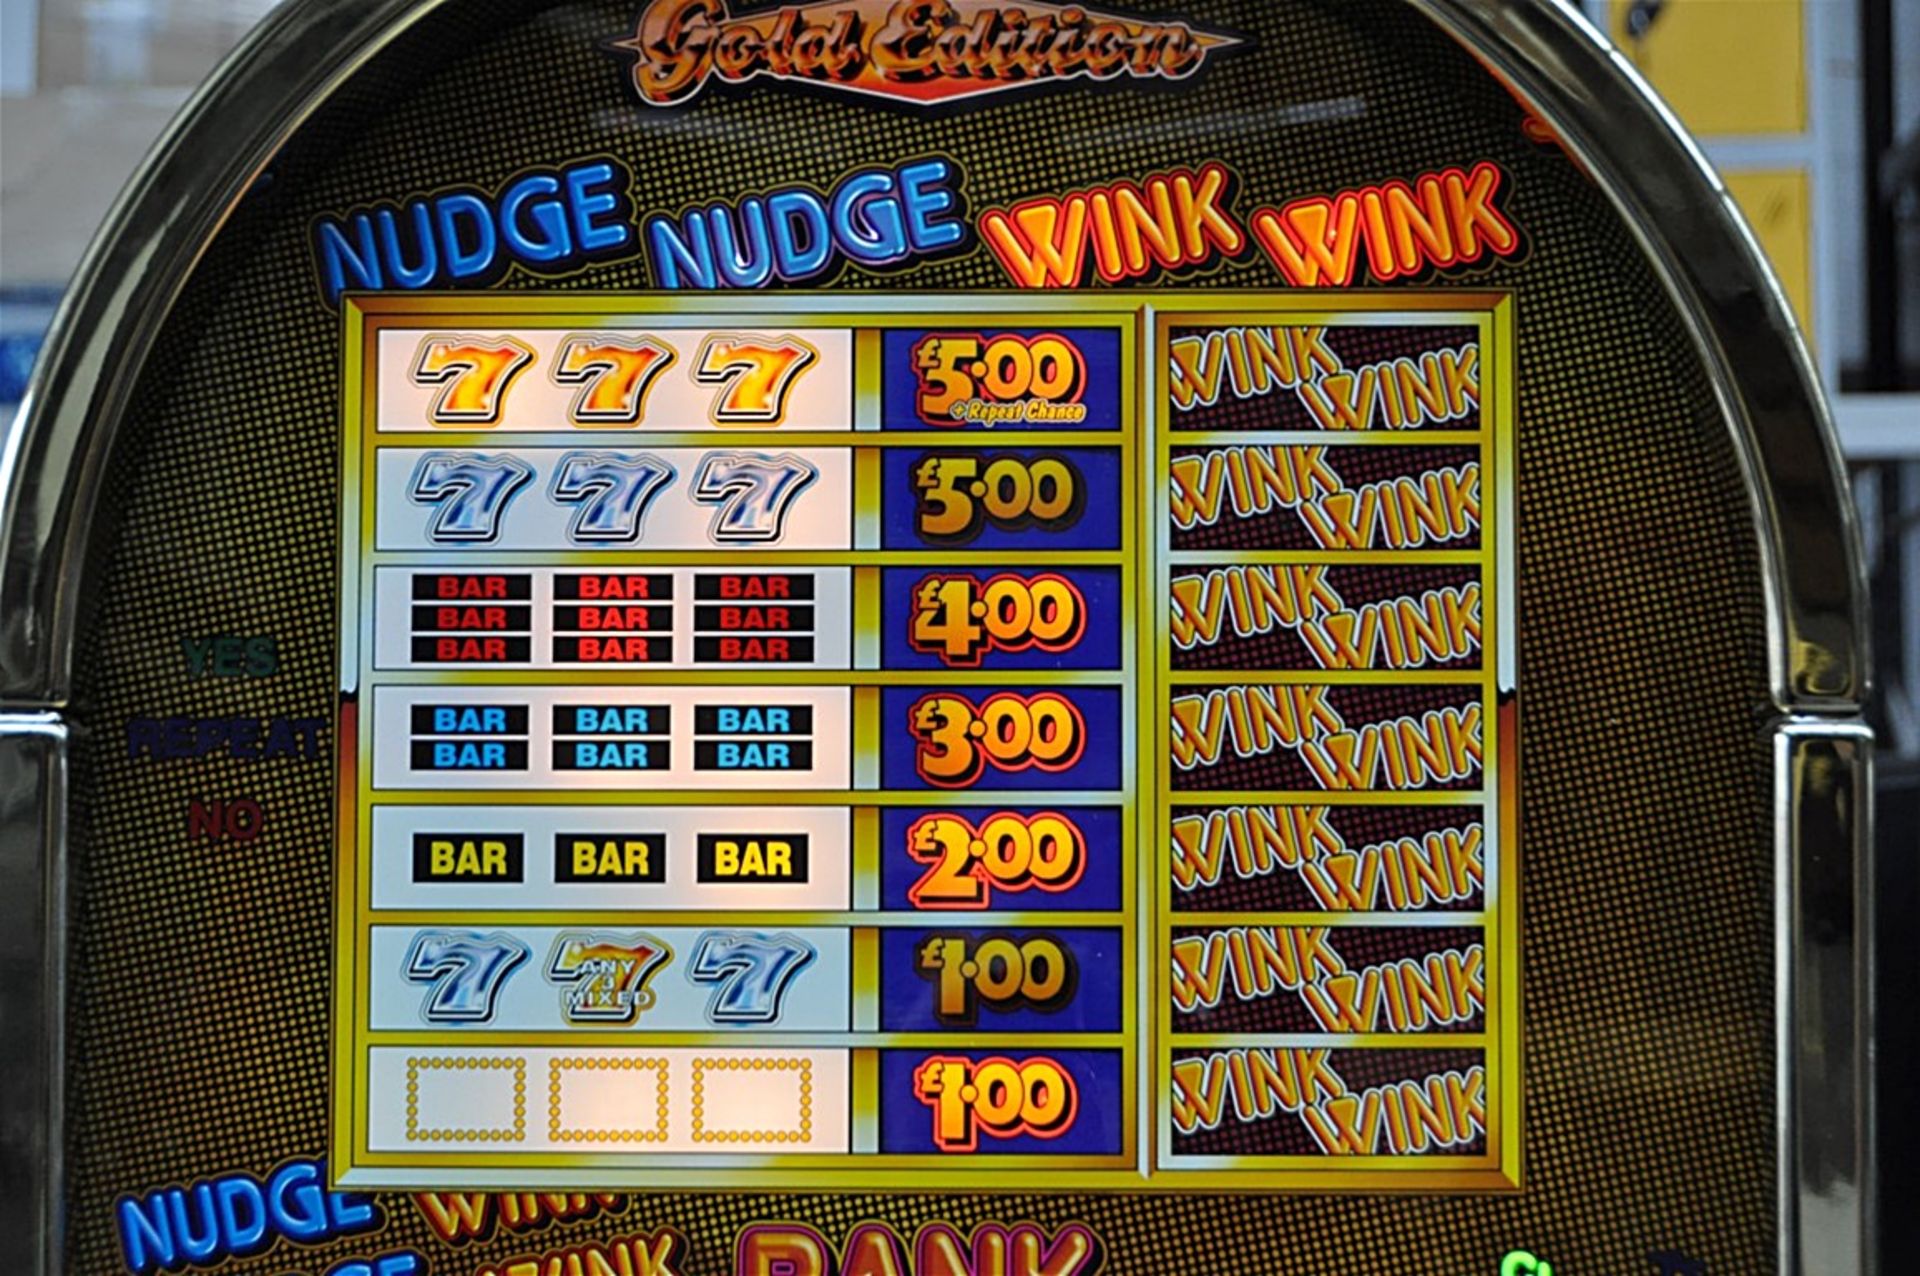 1 x "NUDGE-NUDGE WINK-WINK" Arcade Fruit Machine - Manufacturer: Barcrest (1998) - Pre-Owned In Good - Image 2 of 3